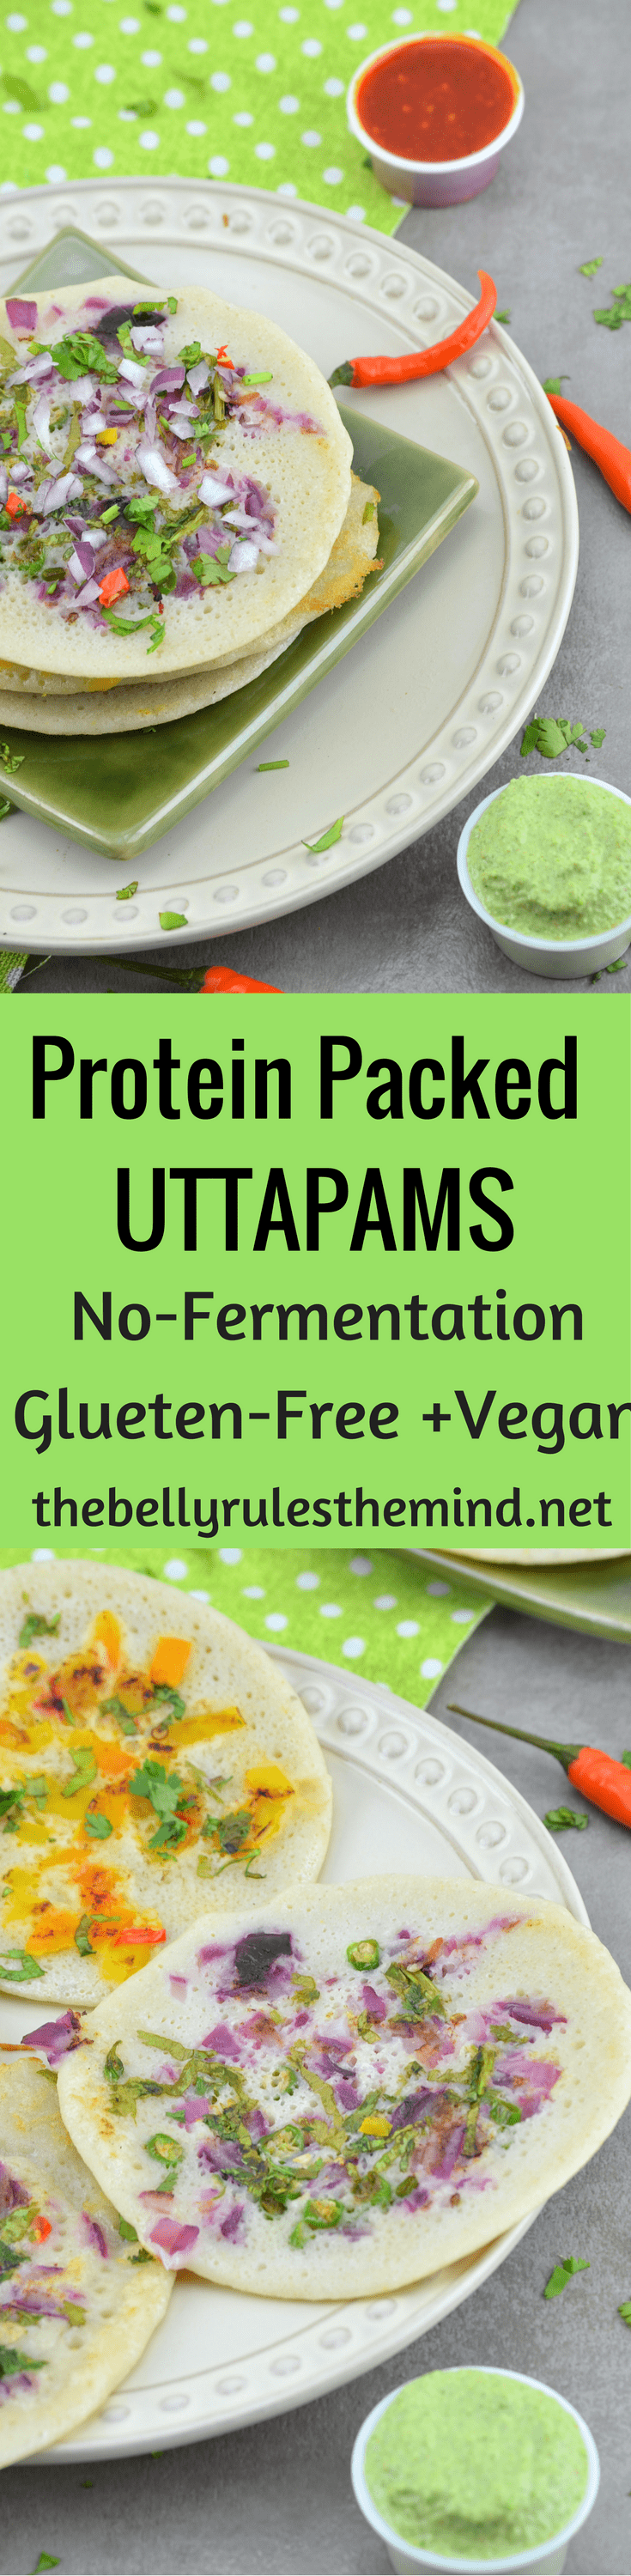 Protein packed Uttapam